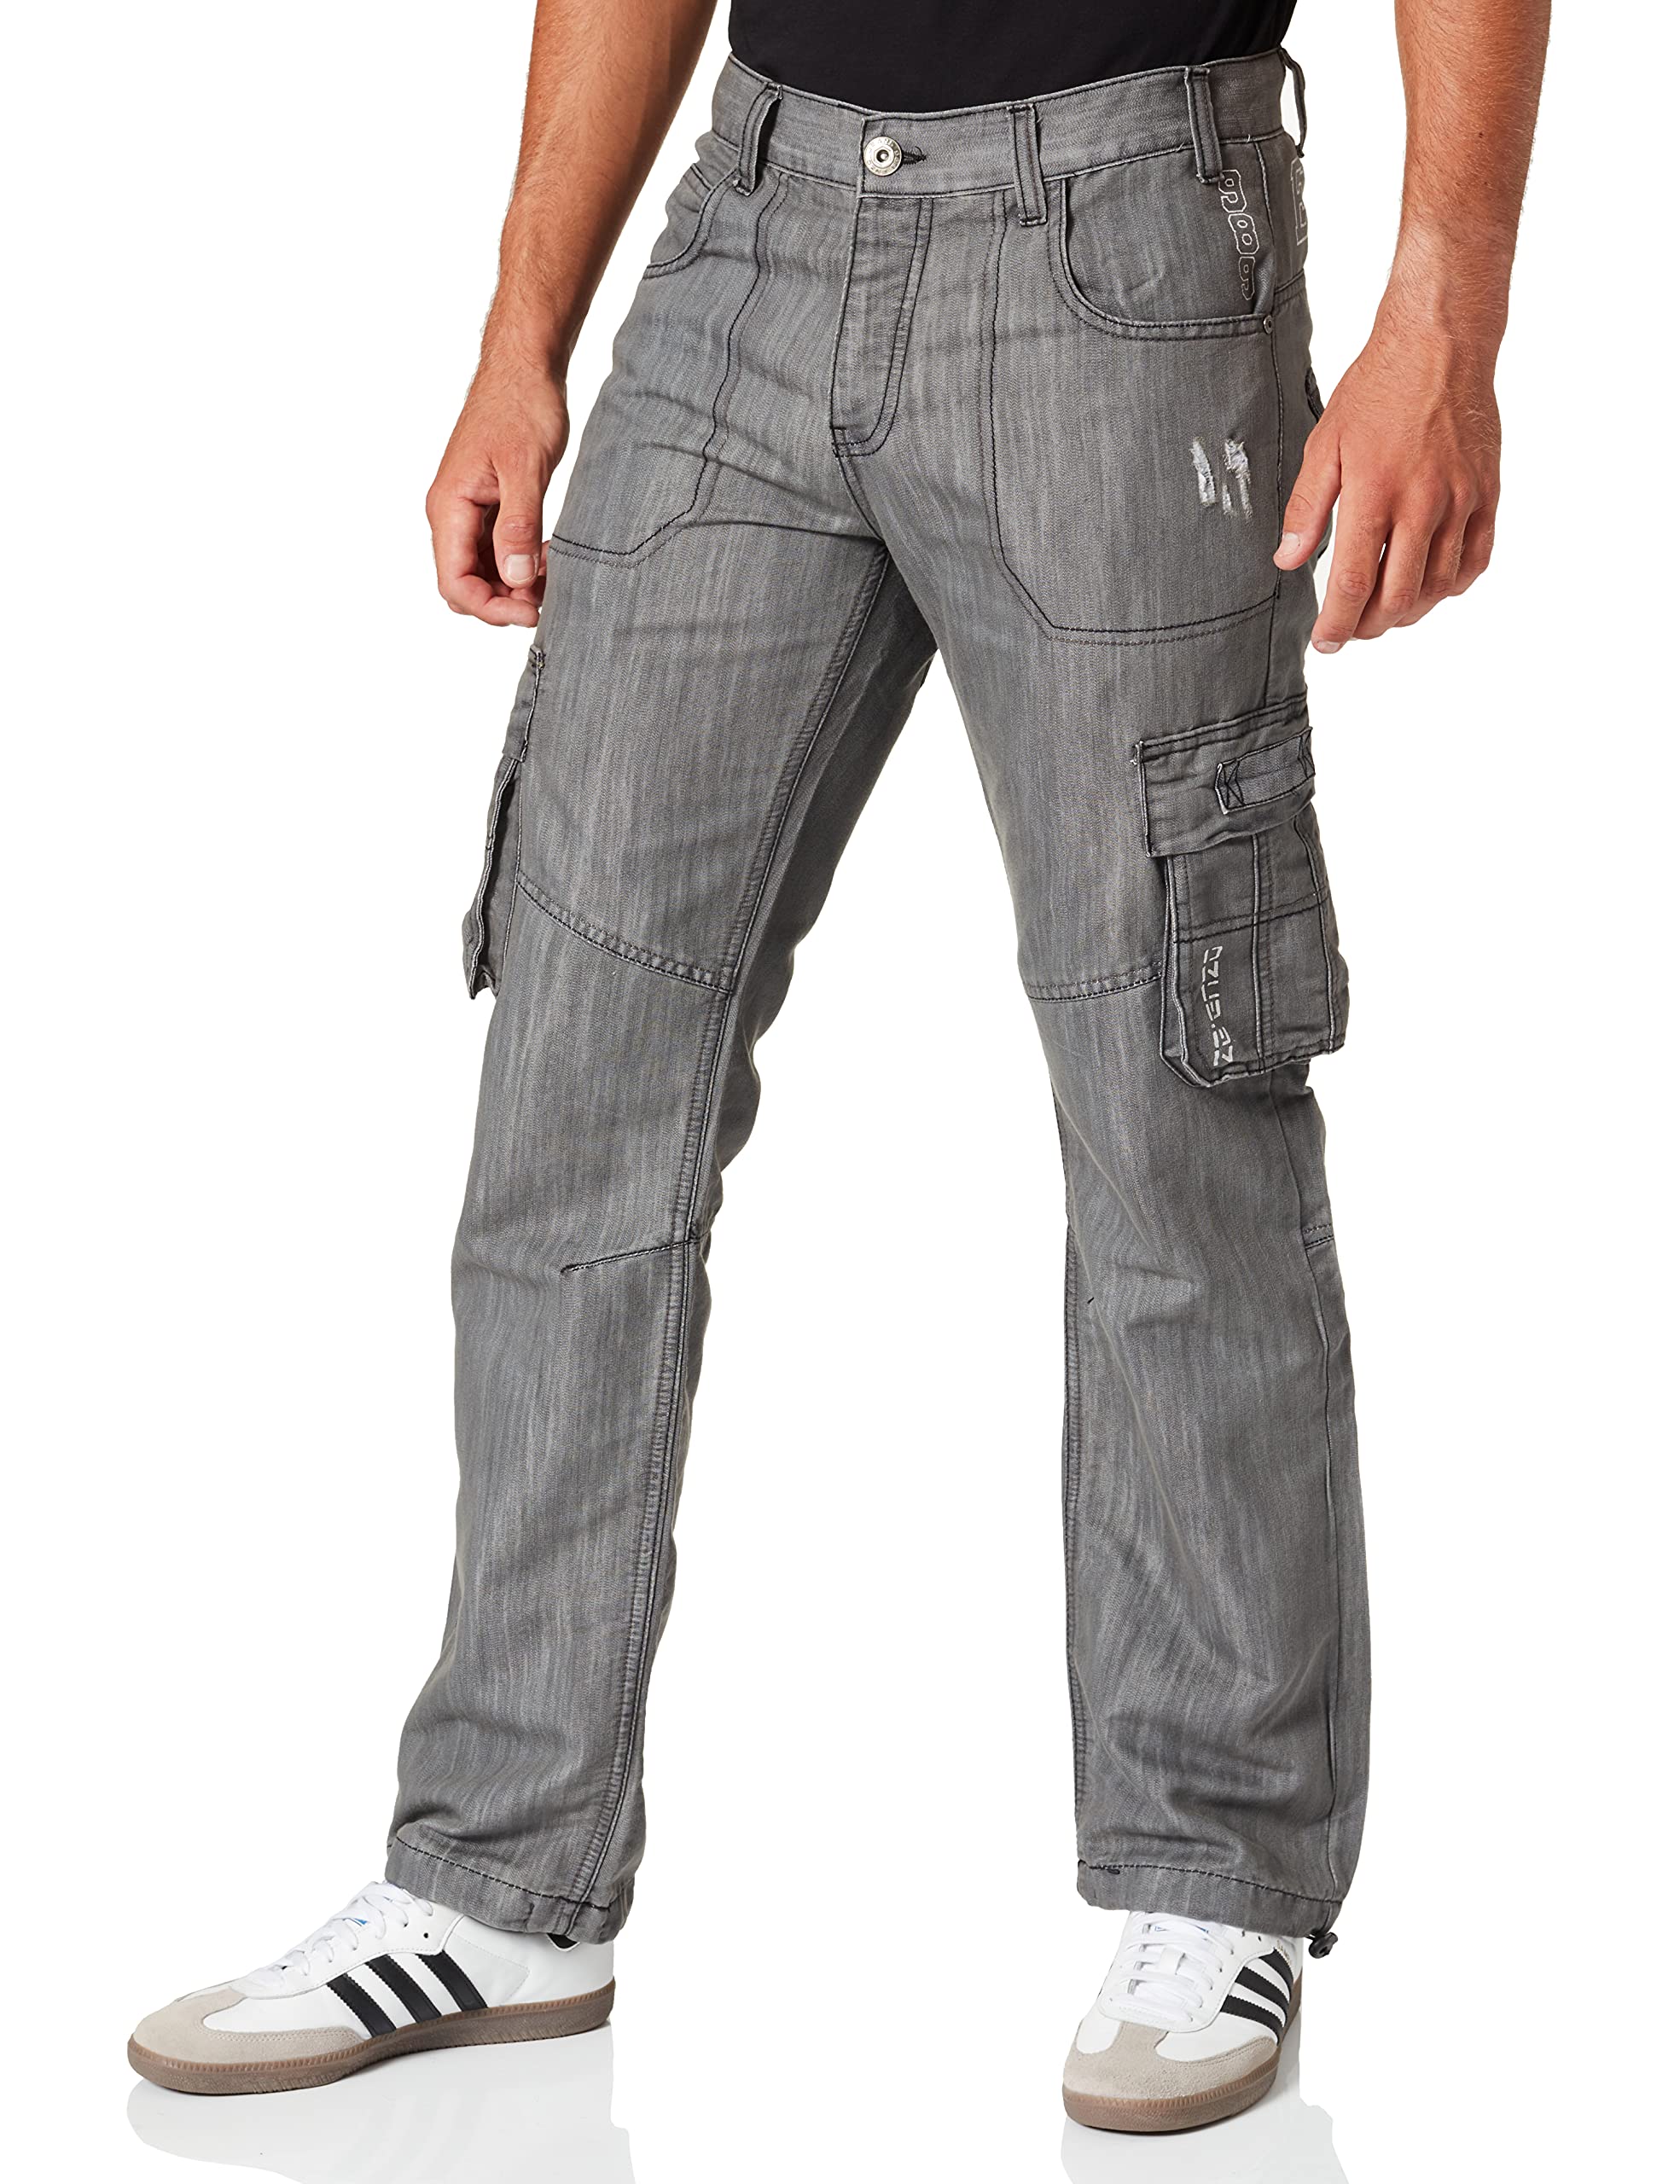 Enzo Herren Ez404 Loose Fit Jeans, Grau (Grey Grey), 40W / 30L